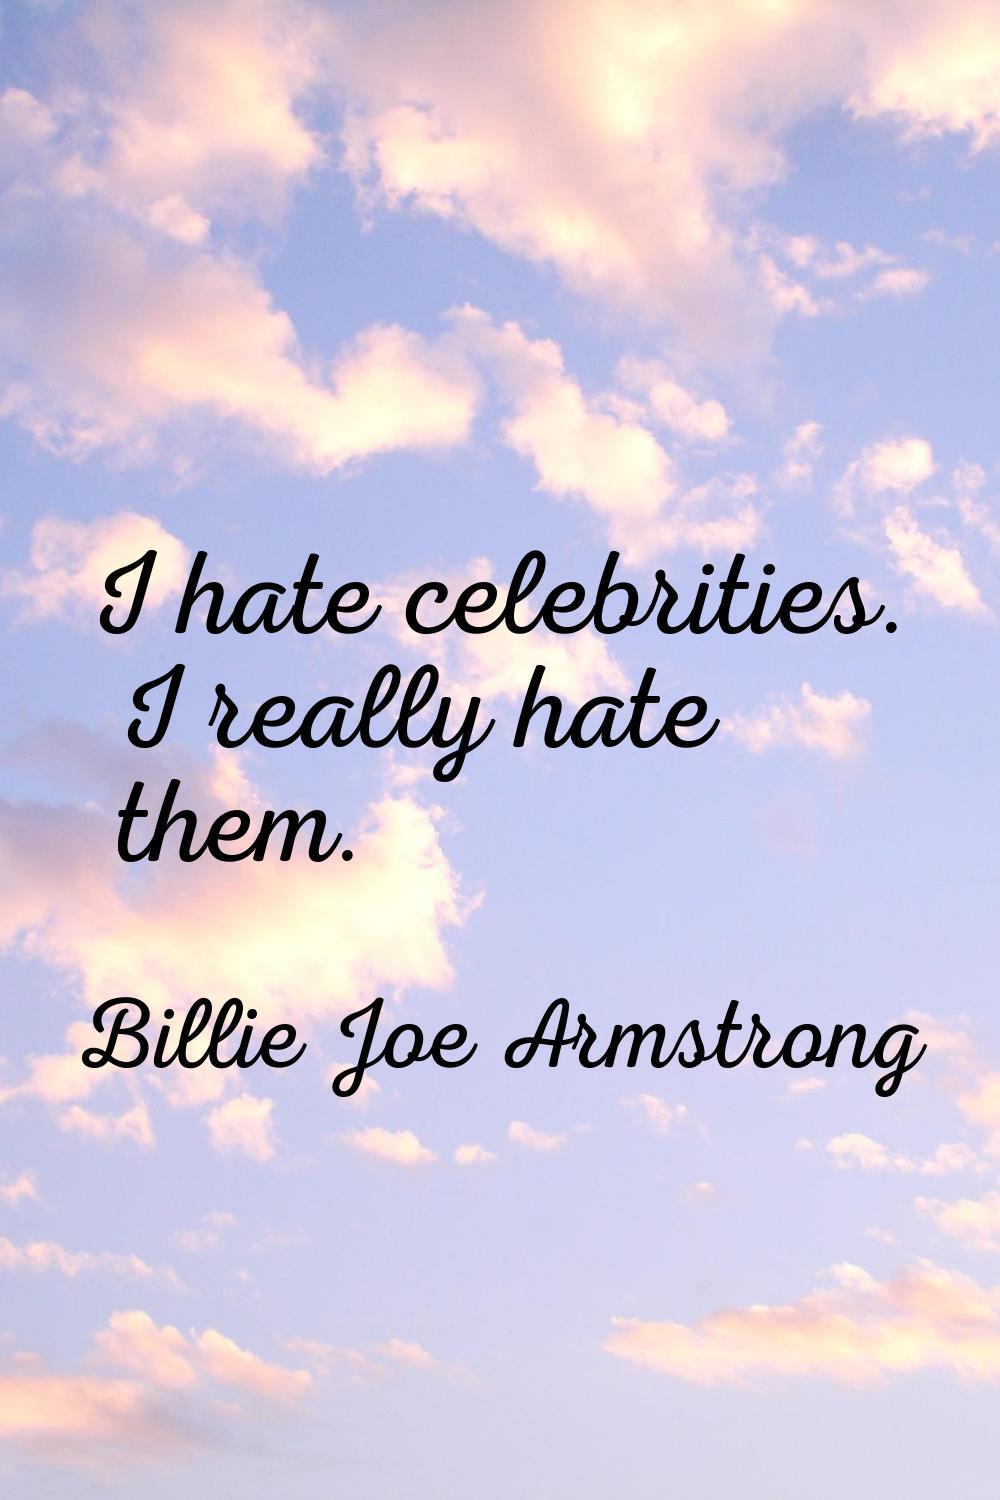 I hate celebrities. I really hate them.